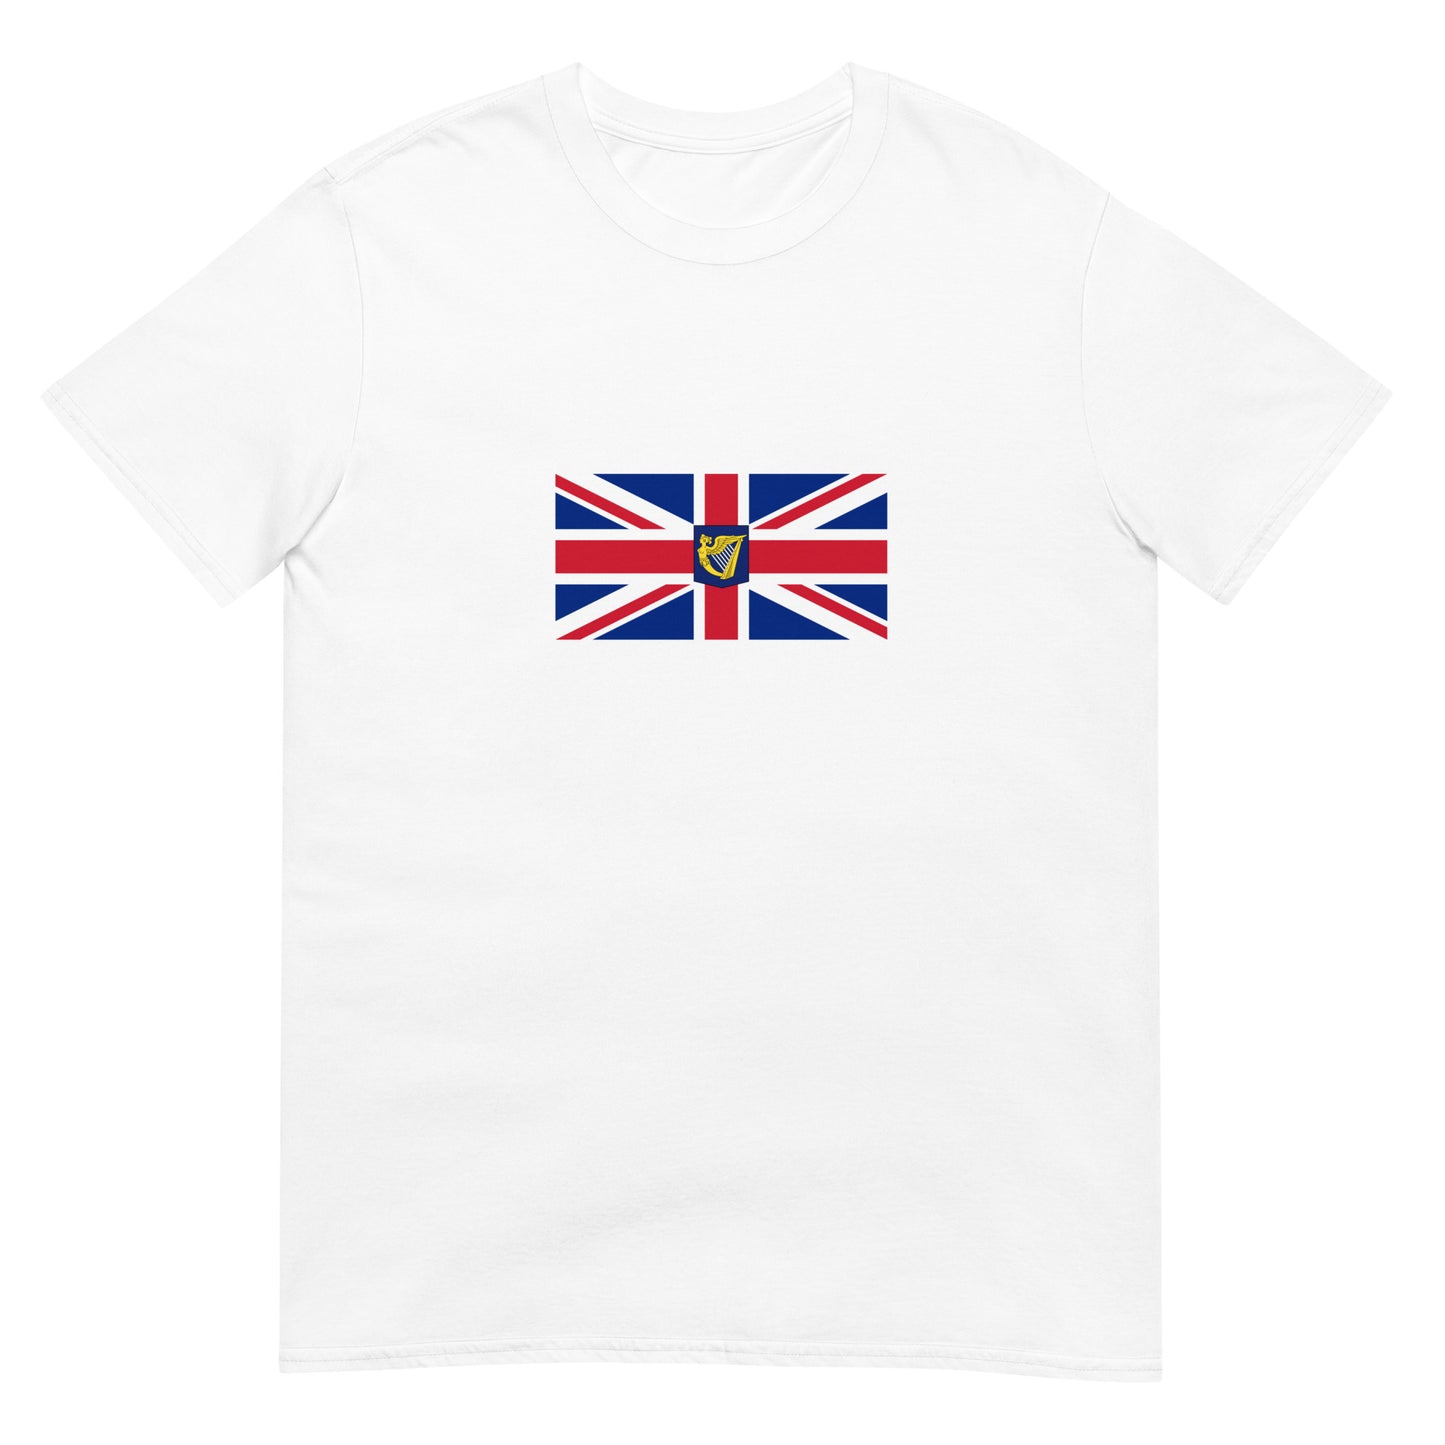 Ireland - United Kingdom of Great Britain and Ireland (1801-1922) | Irish Flag Interactive History T-Shirt